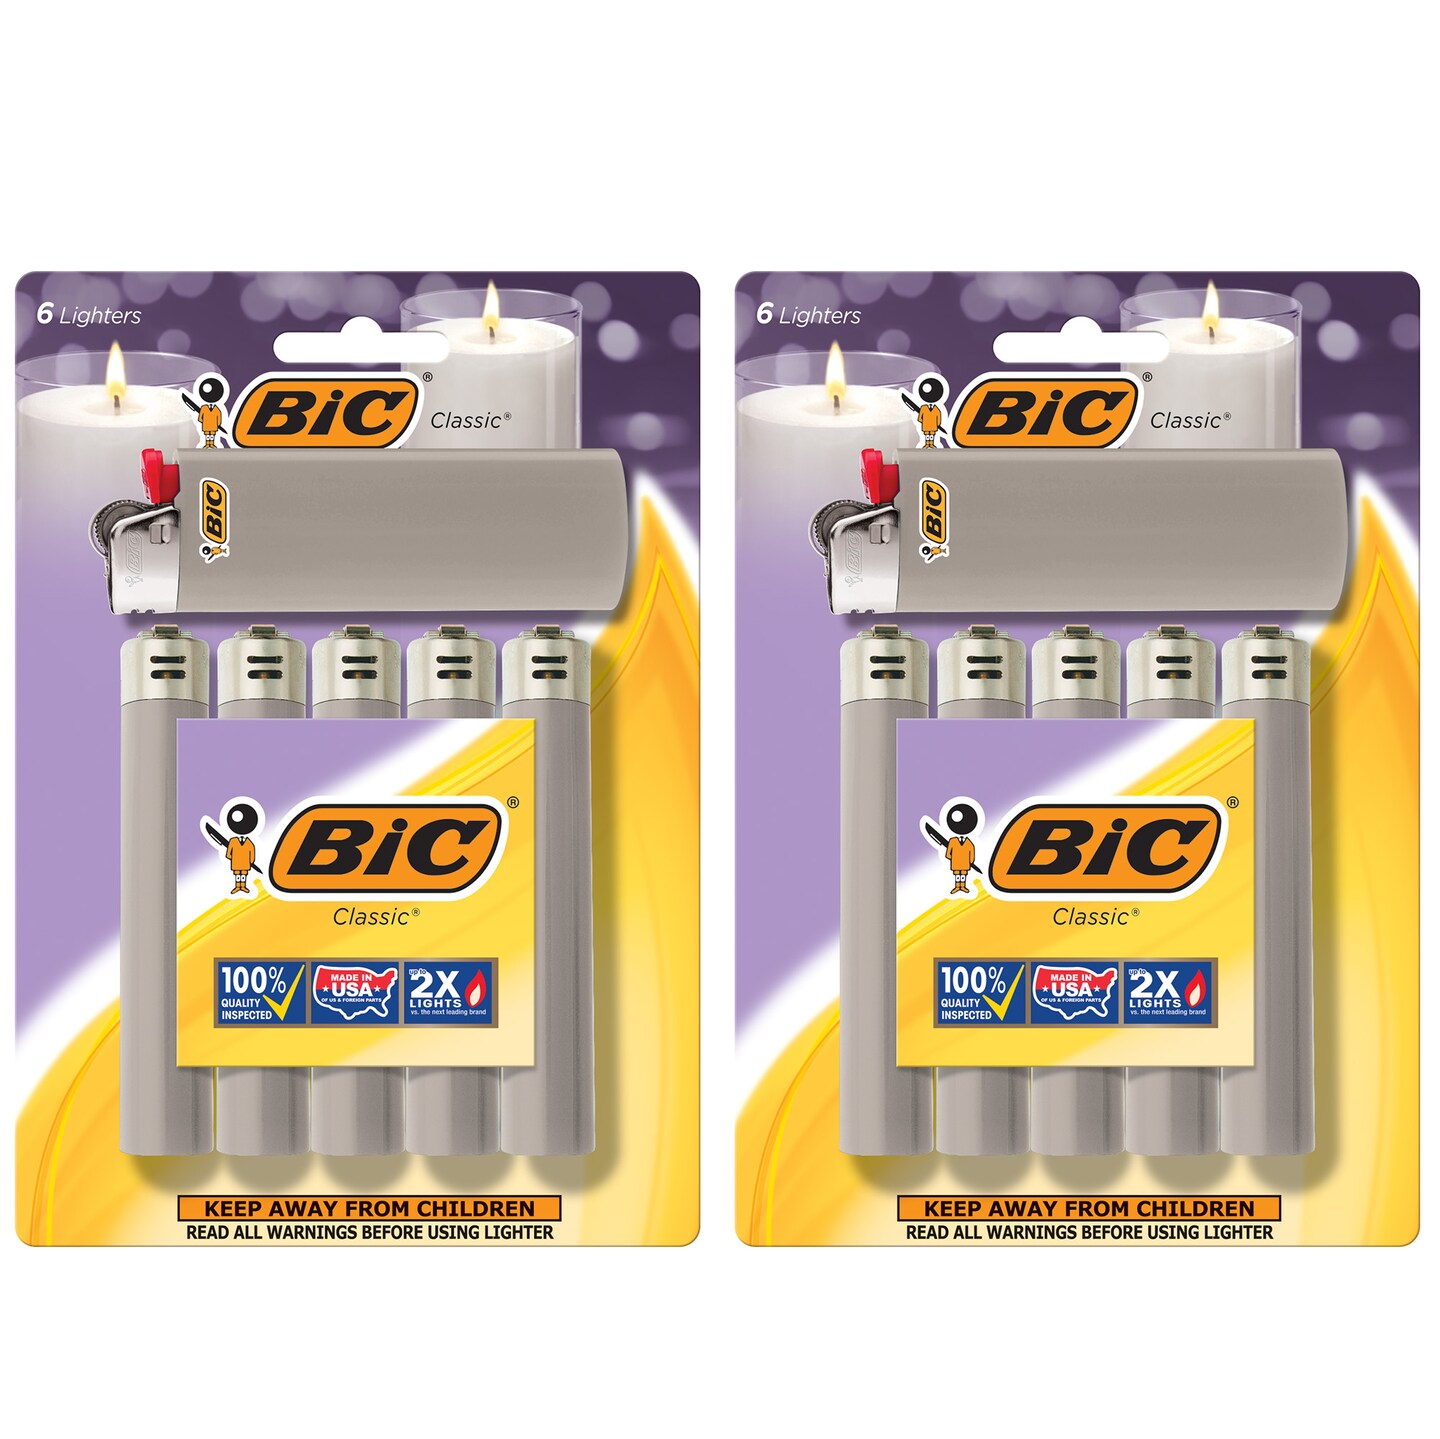 BIC Classic Lighter, 12-Packs